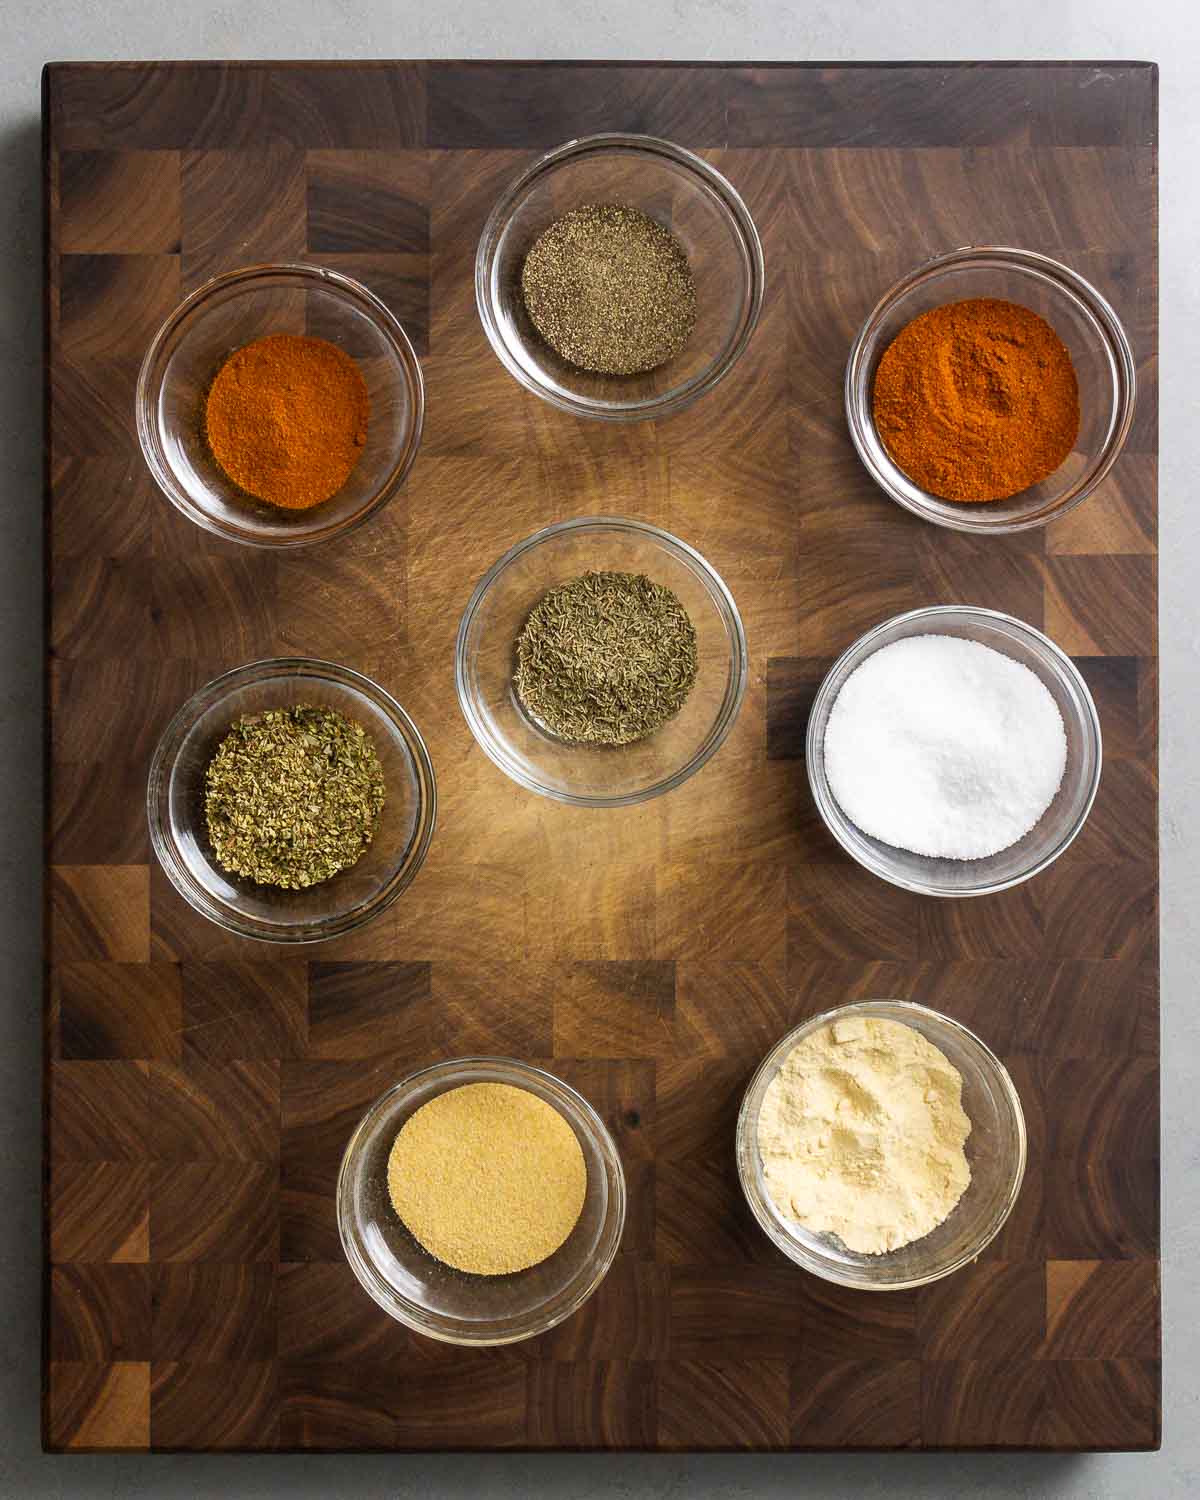 Ingredients shown: Paprika, Diamond crystal kosher salt, onion, powder, granulated garlic, dried oregano, dried thyme, black pepper, and cayenne.